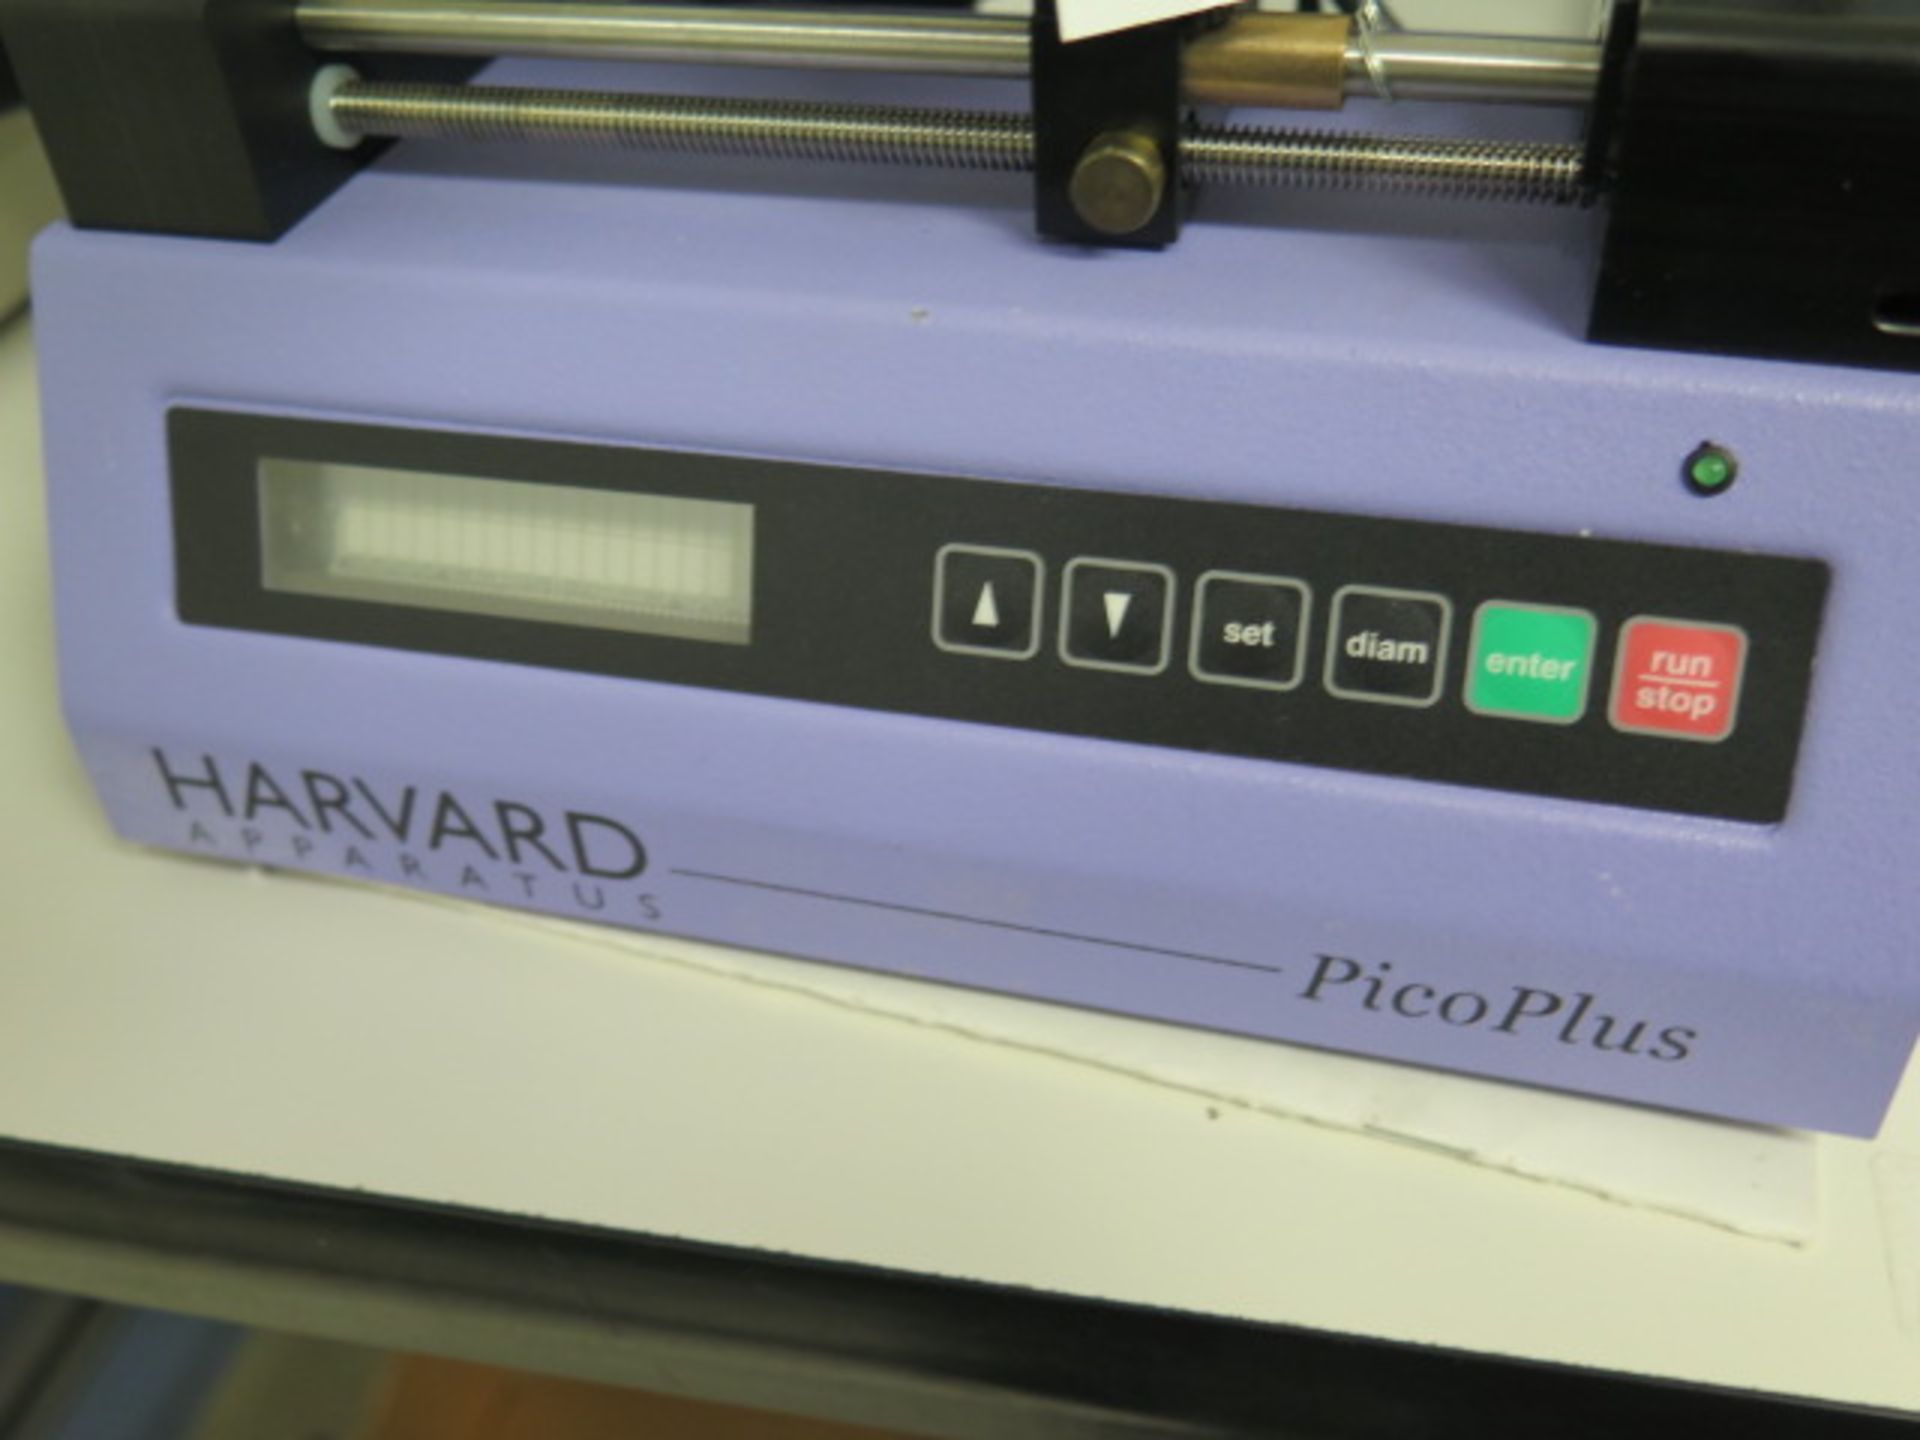 Harvard "Pico Plus" mdl. 70-2213 Syringe Pump (SOLD AS-IS - NO WARRANTY) - Image 4 of 5